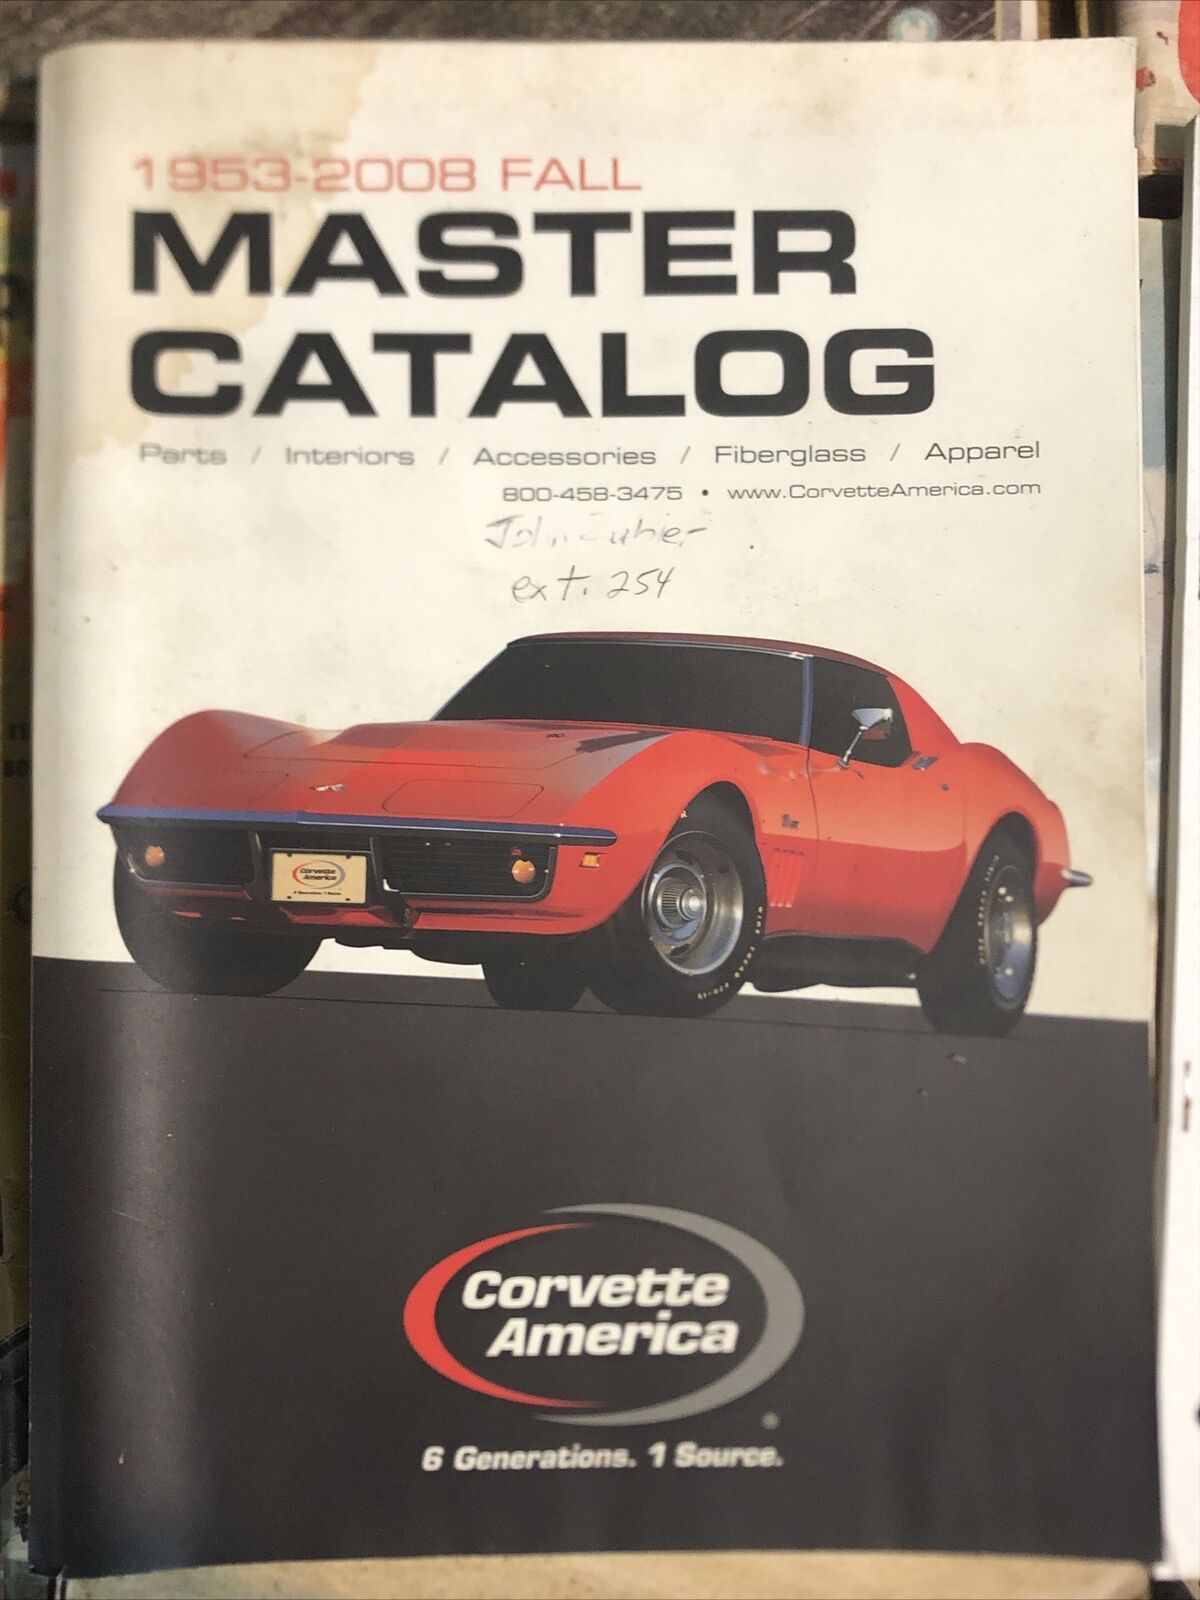 1953-2008 Corvette America Master Catalog & This Old Corvette Preowned